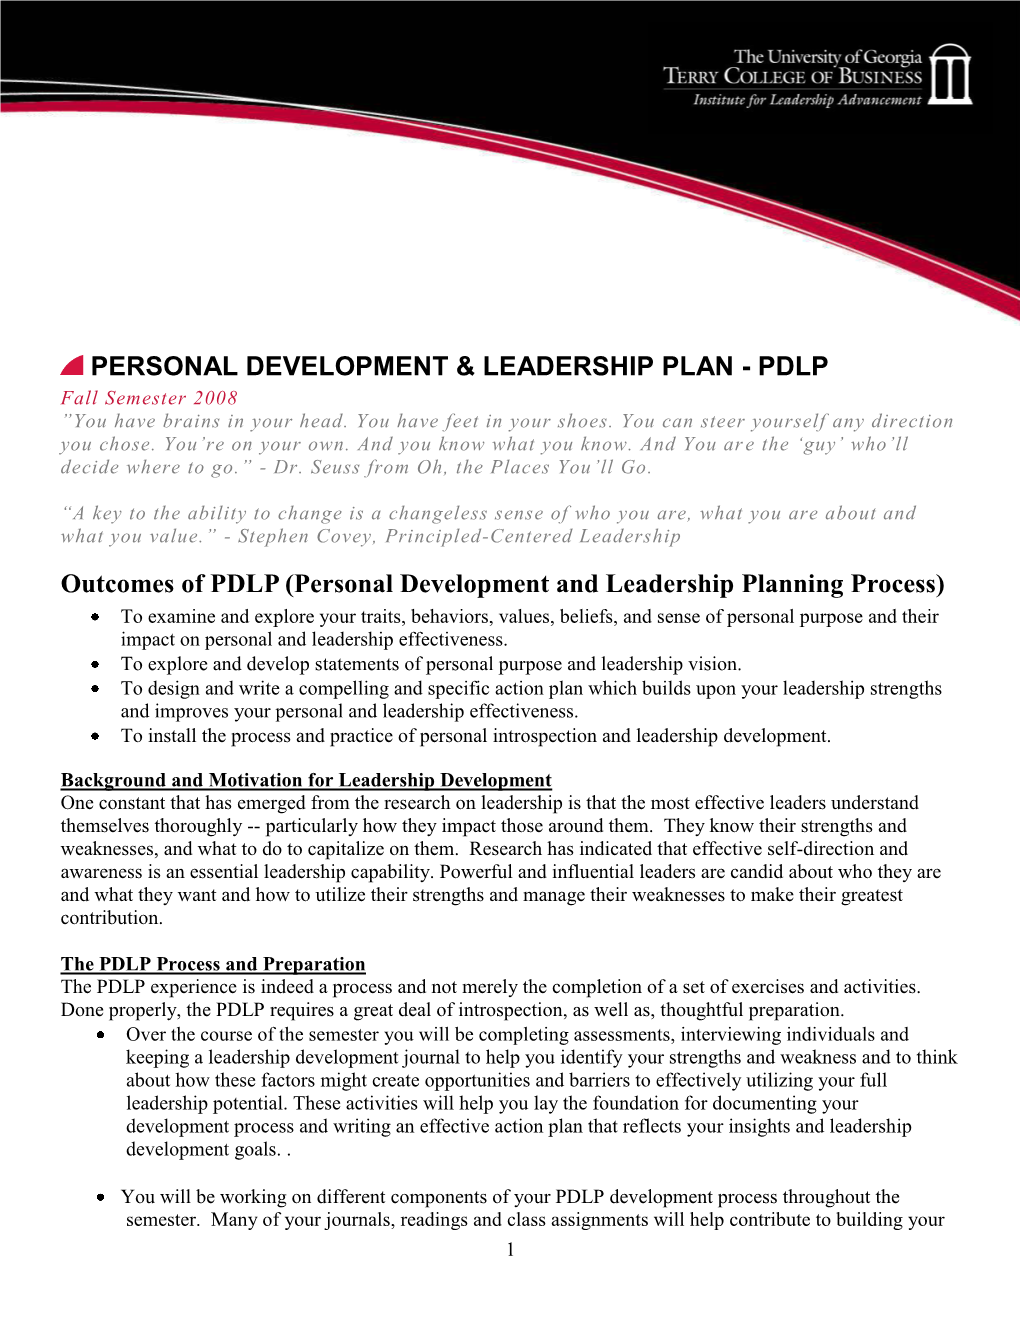 Personal Development & Leadership Plan